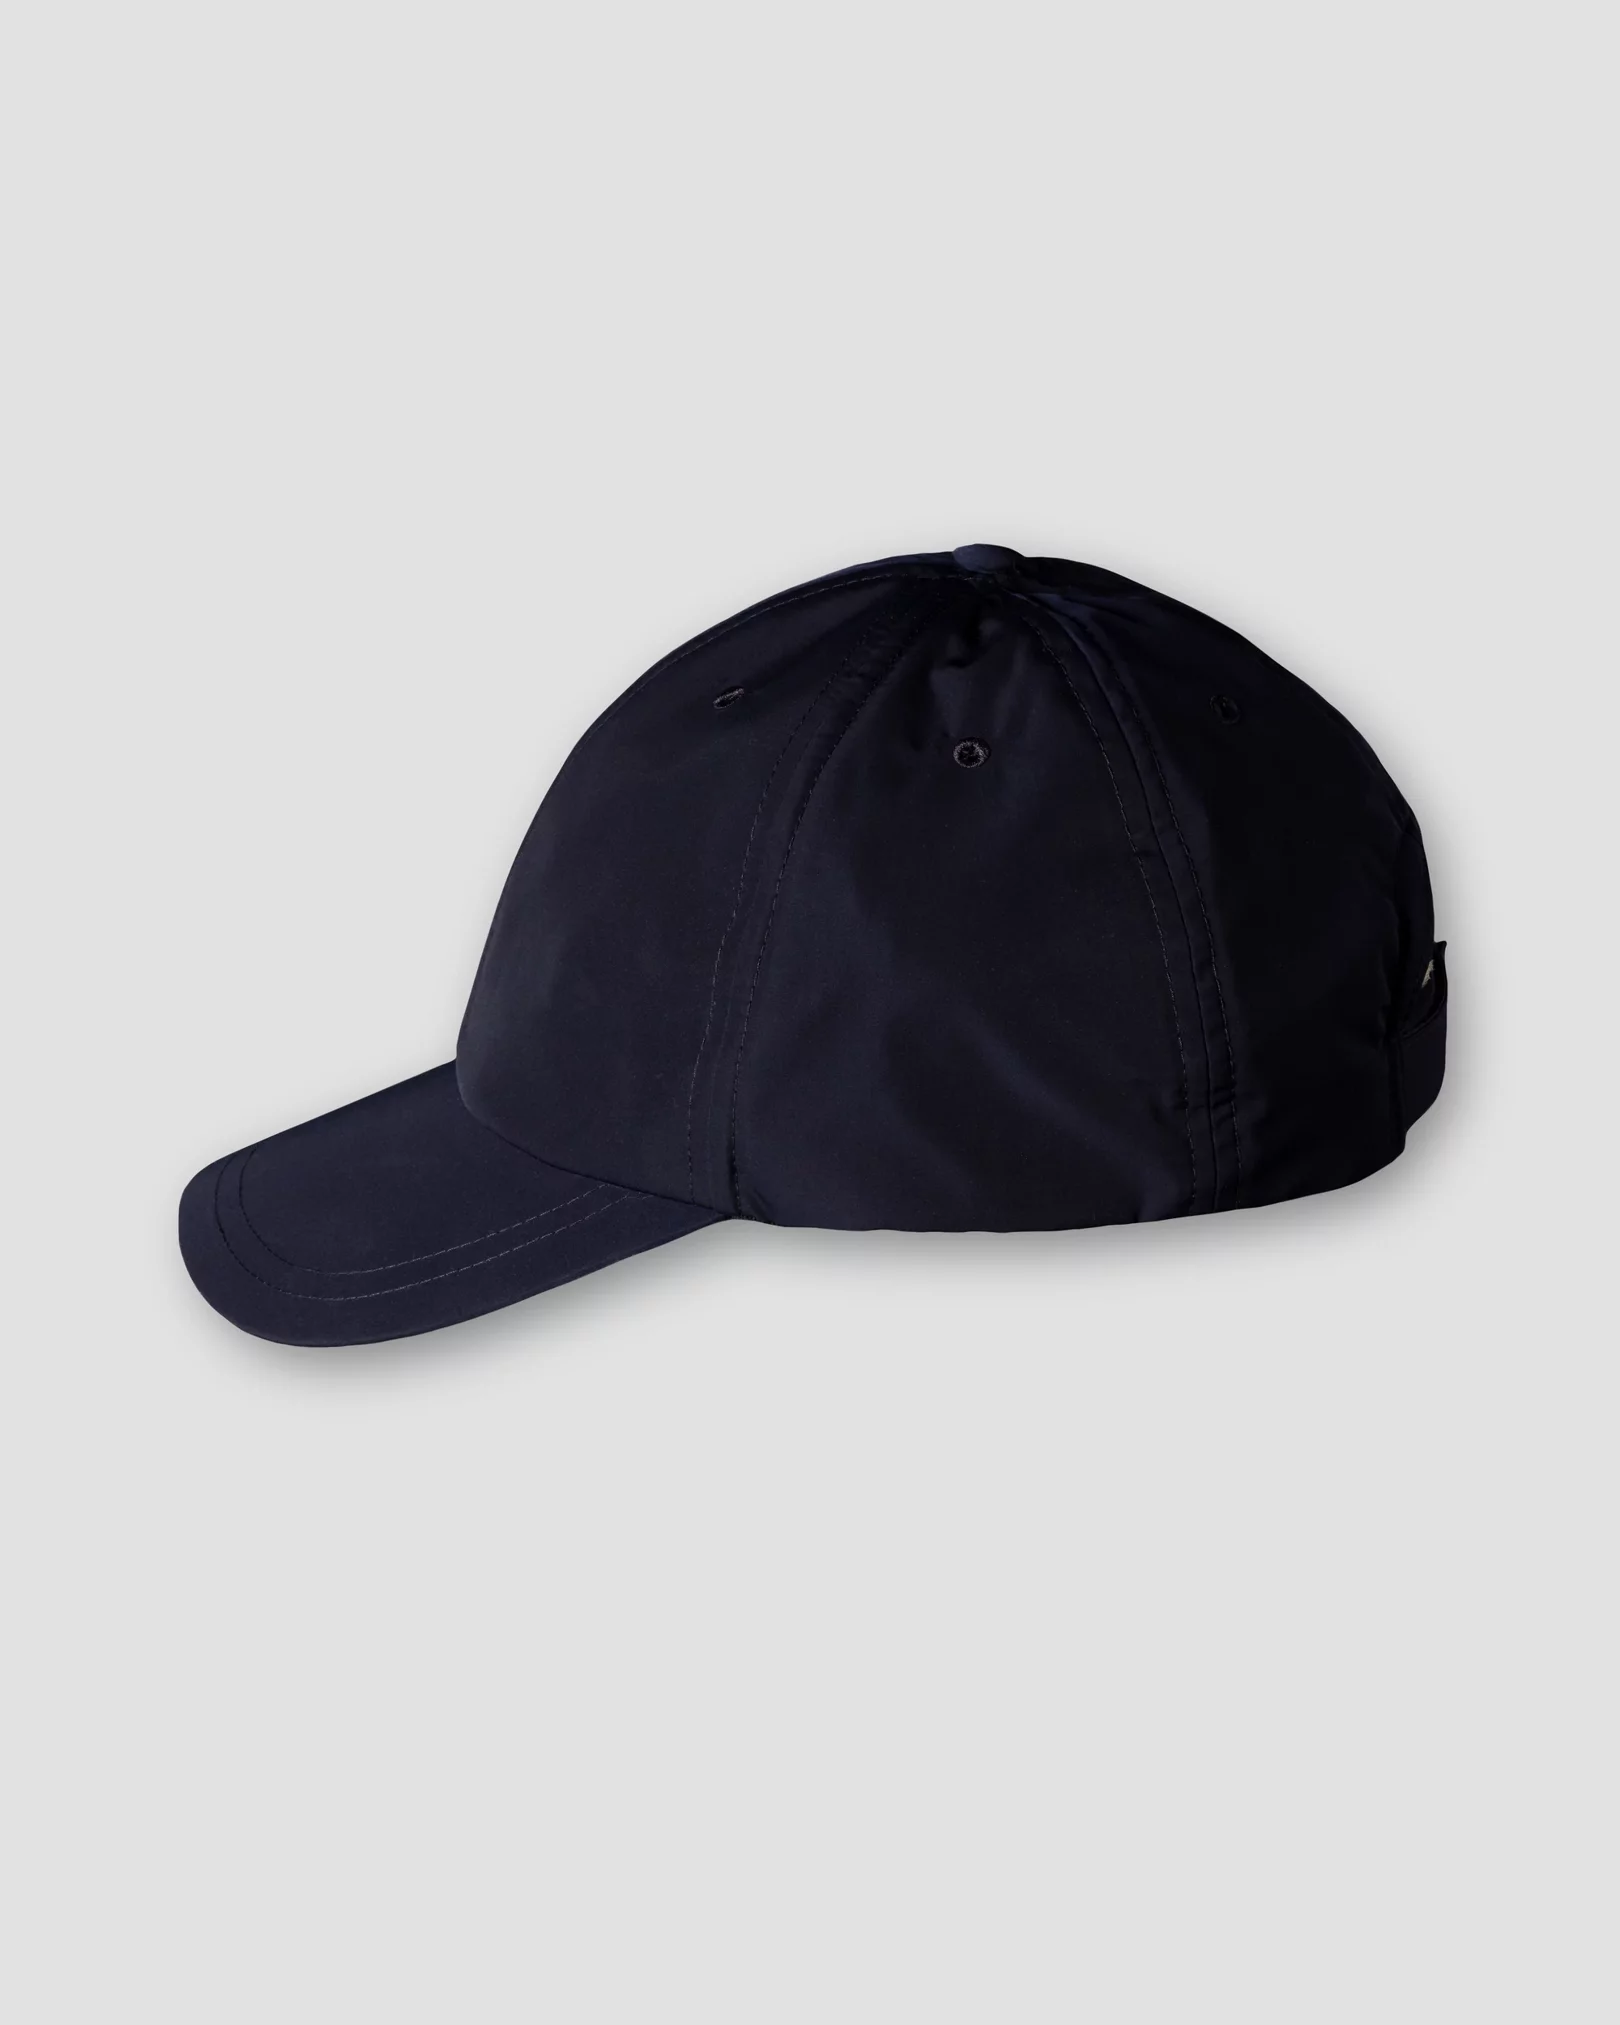 Eton - dark blue sports cap